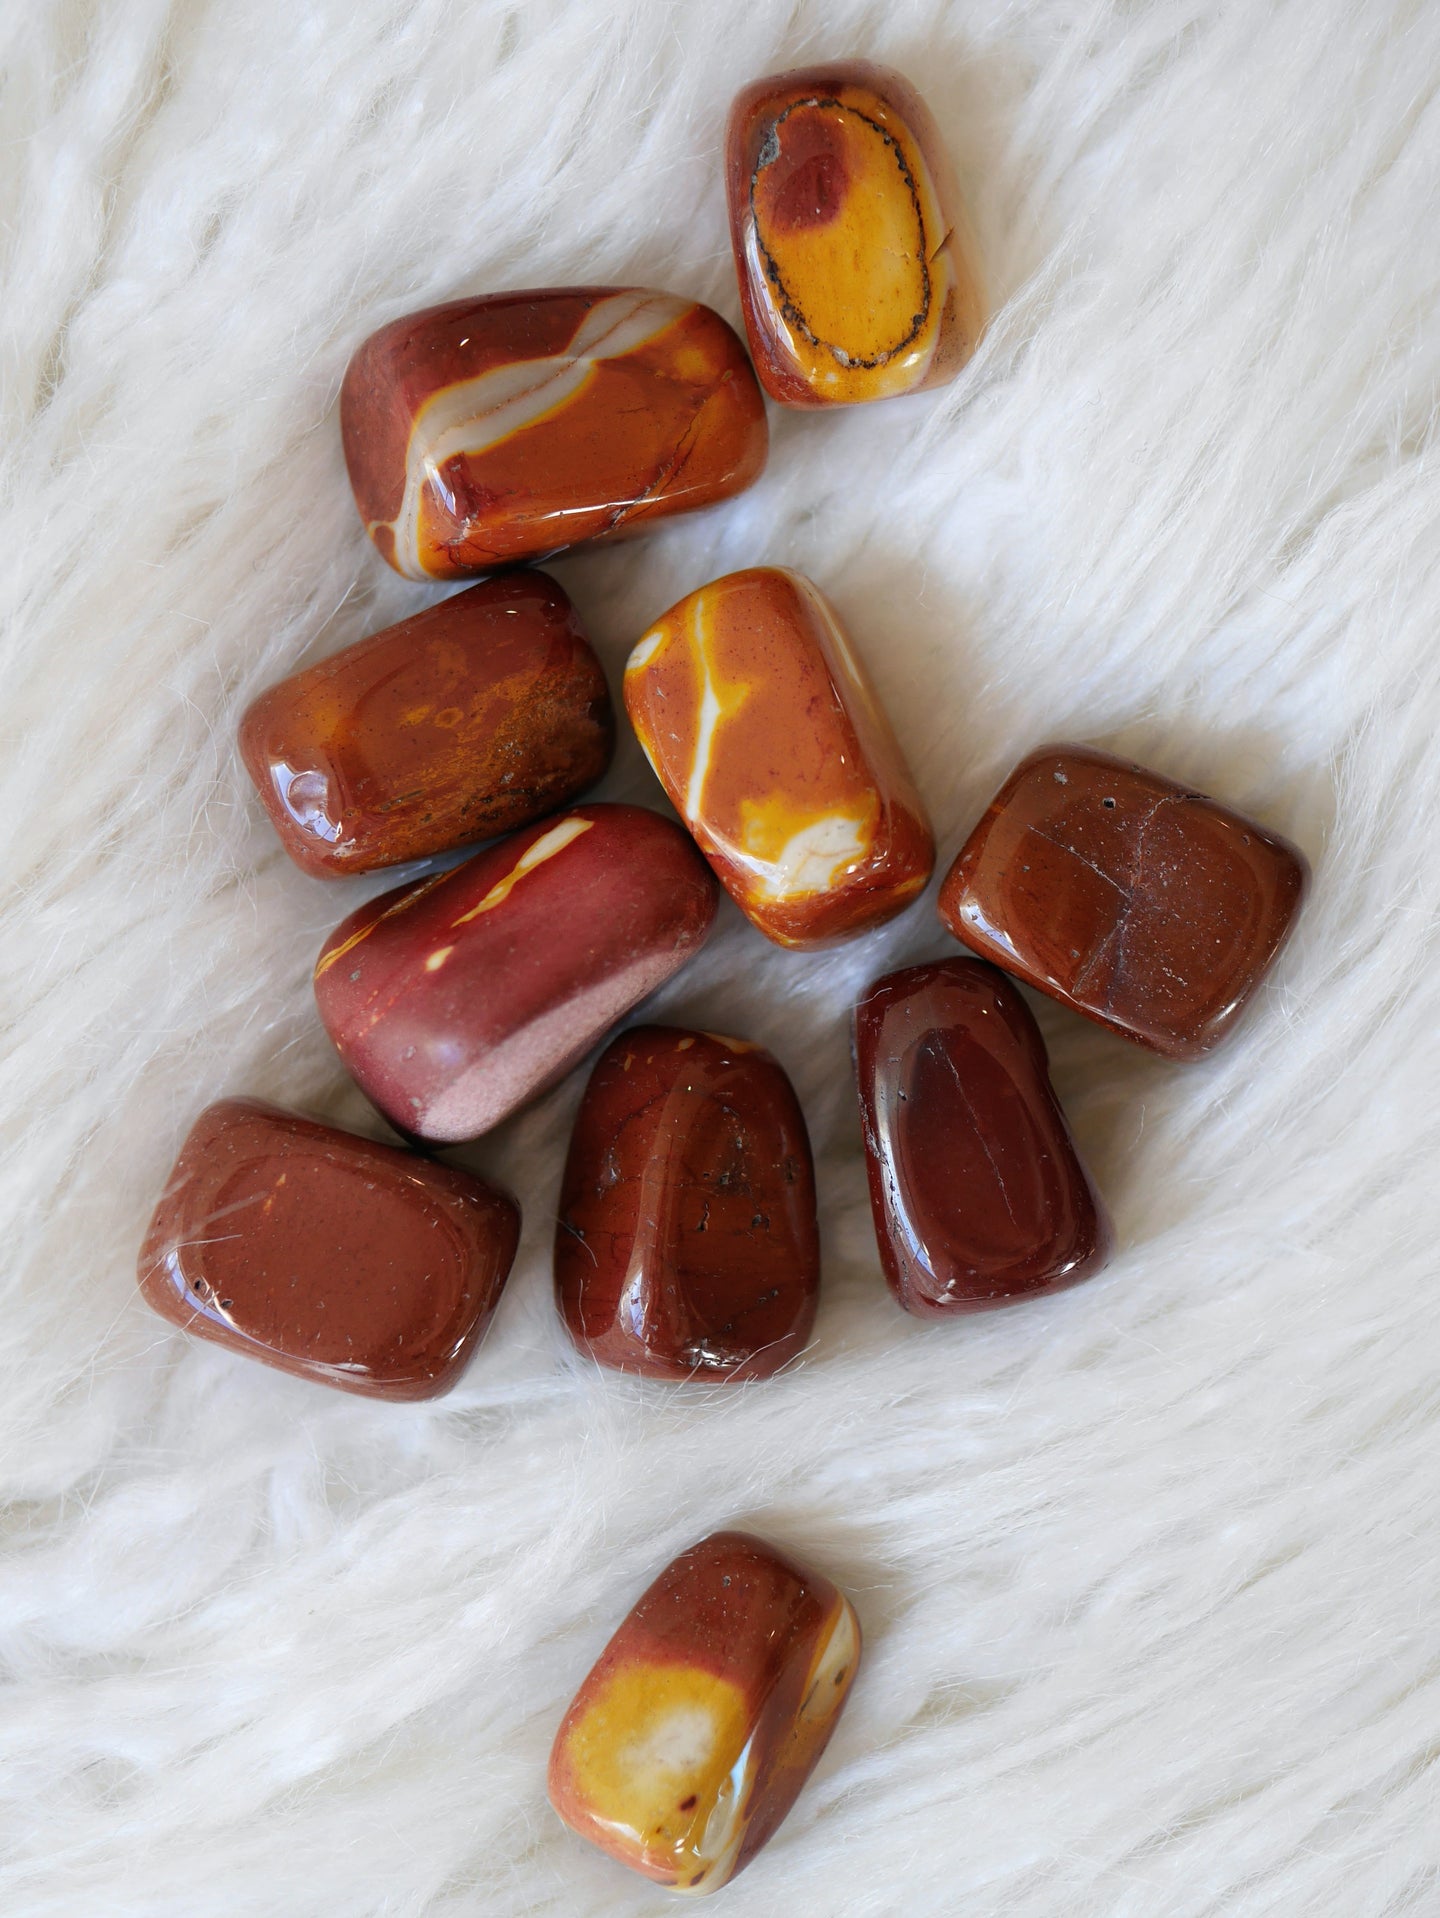 Mookaite tumbled stones